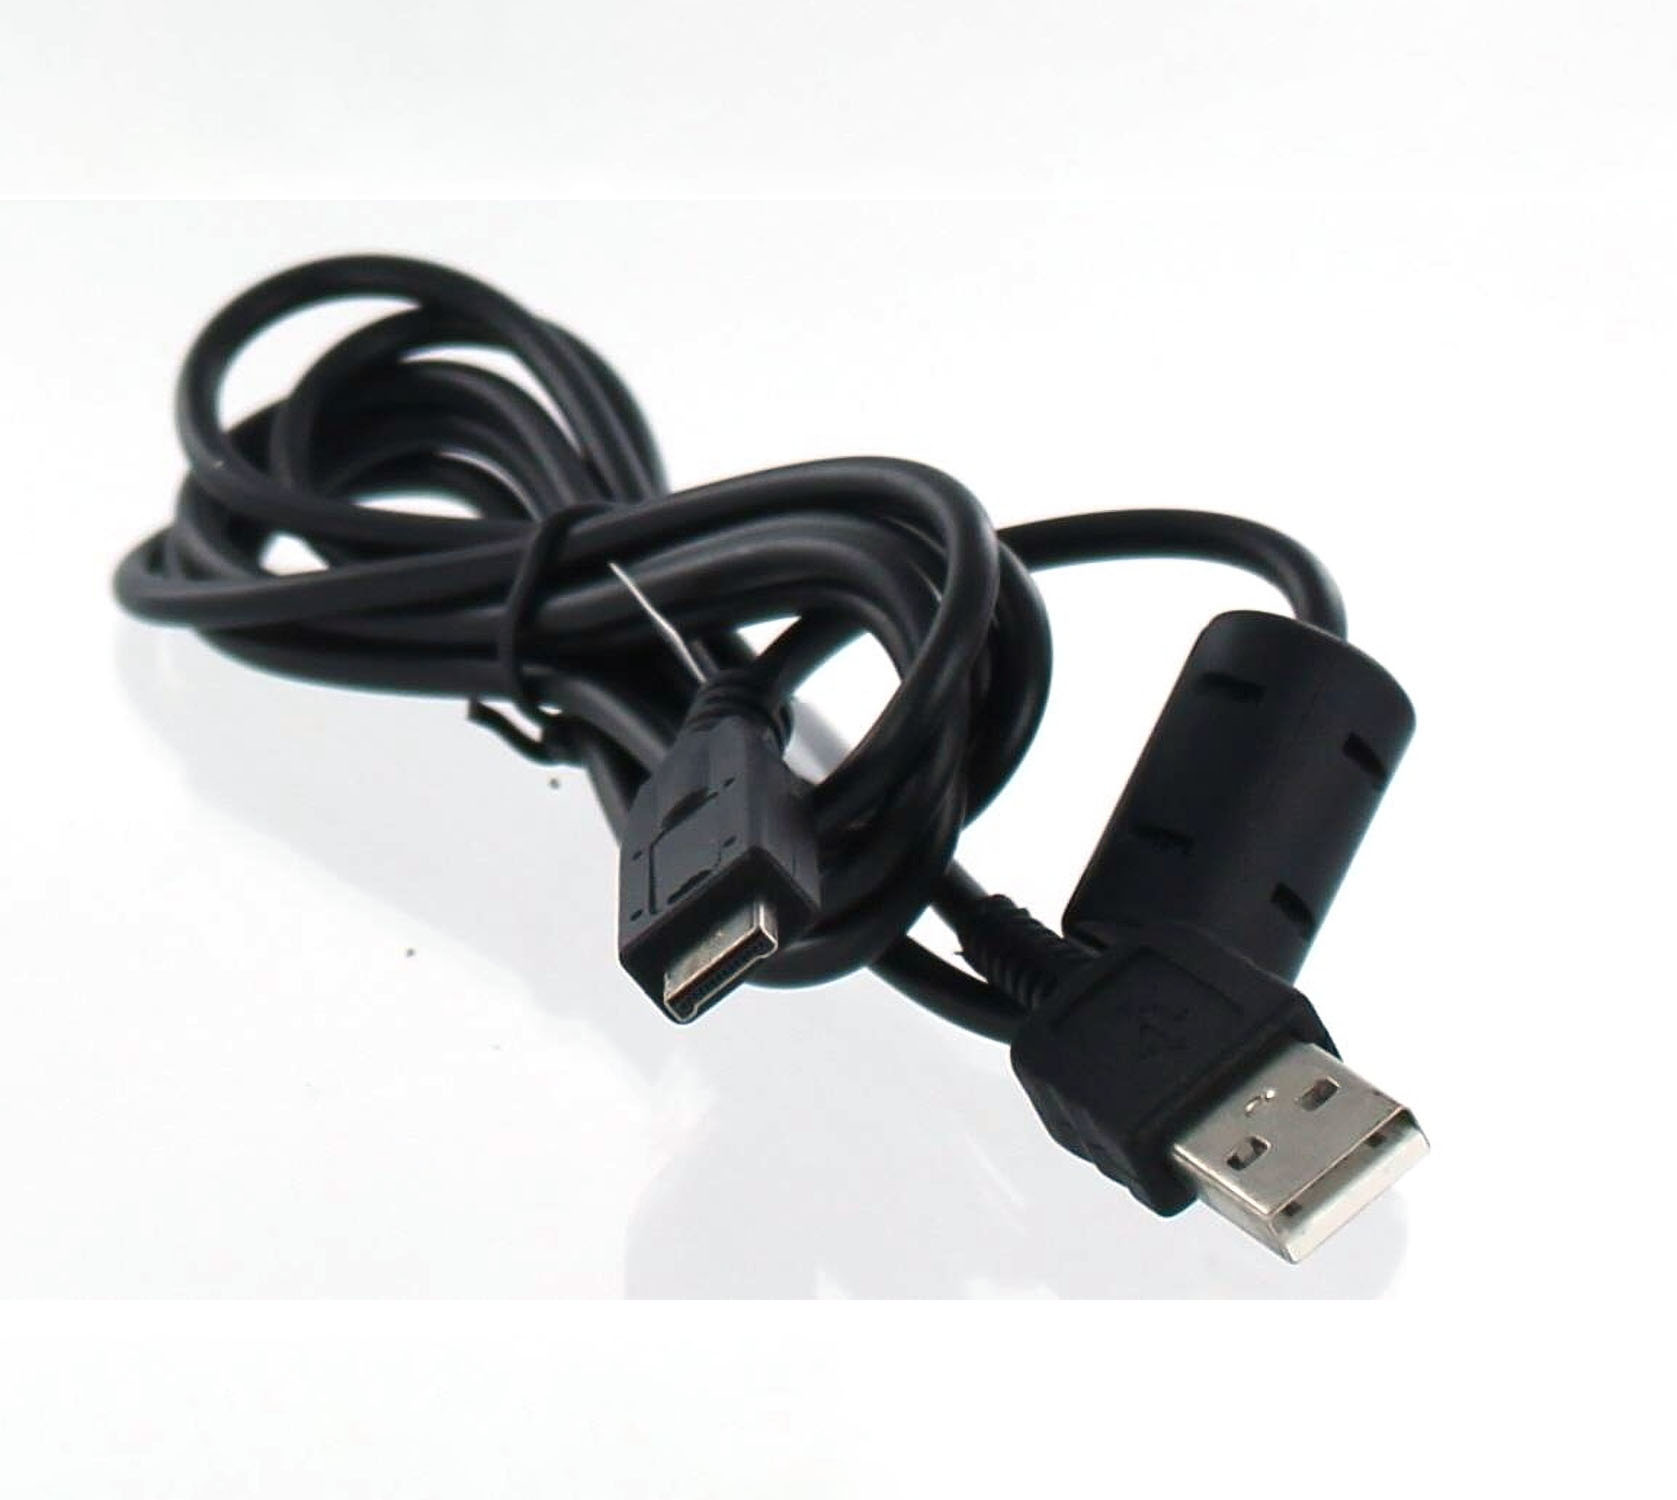 Zubehör Panasonic USB-Datenkabel schwarz Lumix kompatibel DMC-TZ10 mit MOBILOTEC Panasonic,